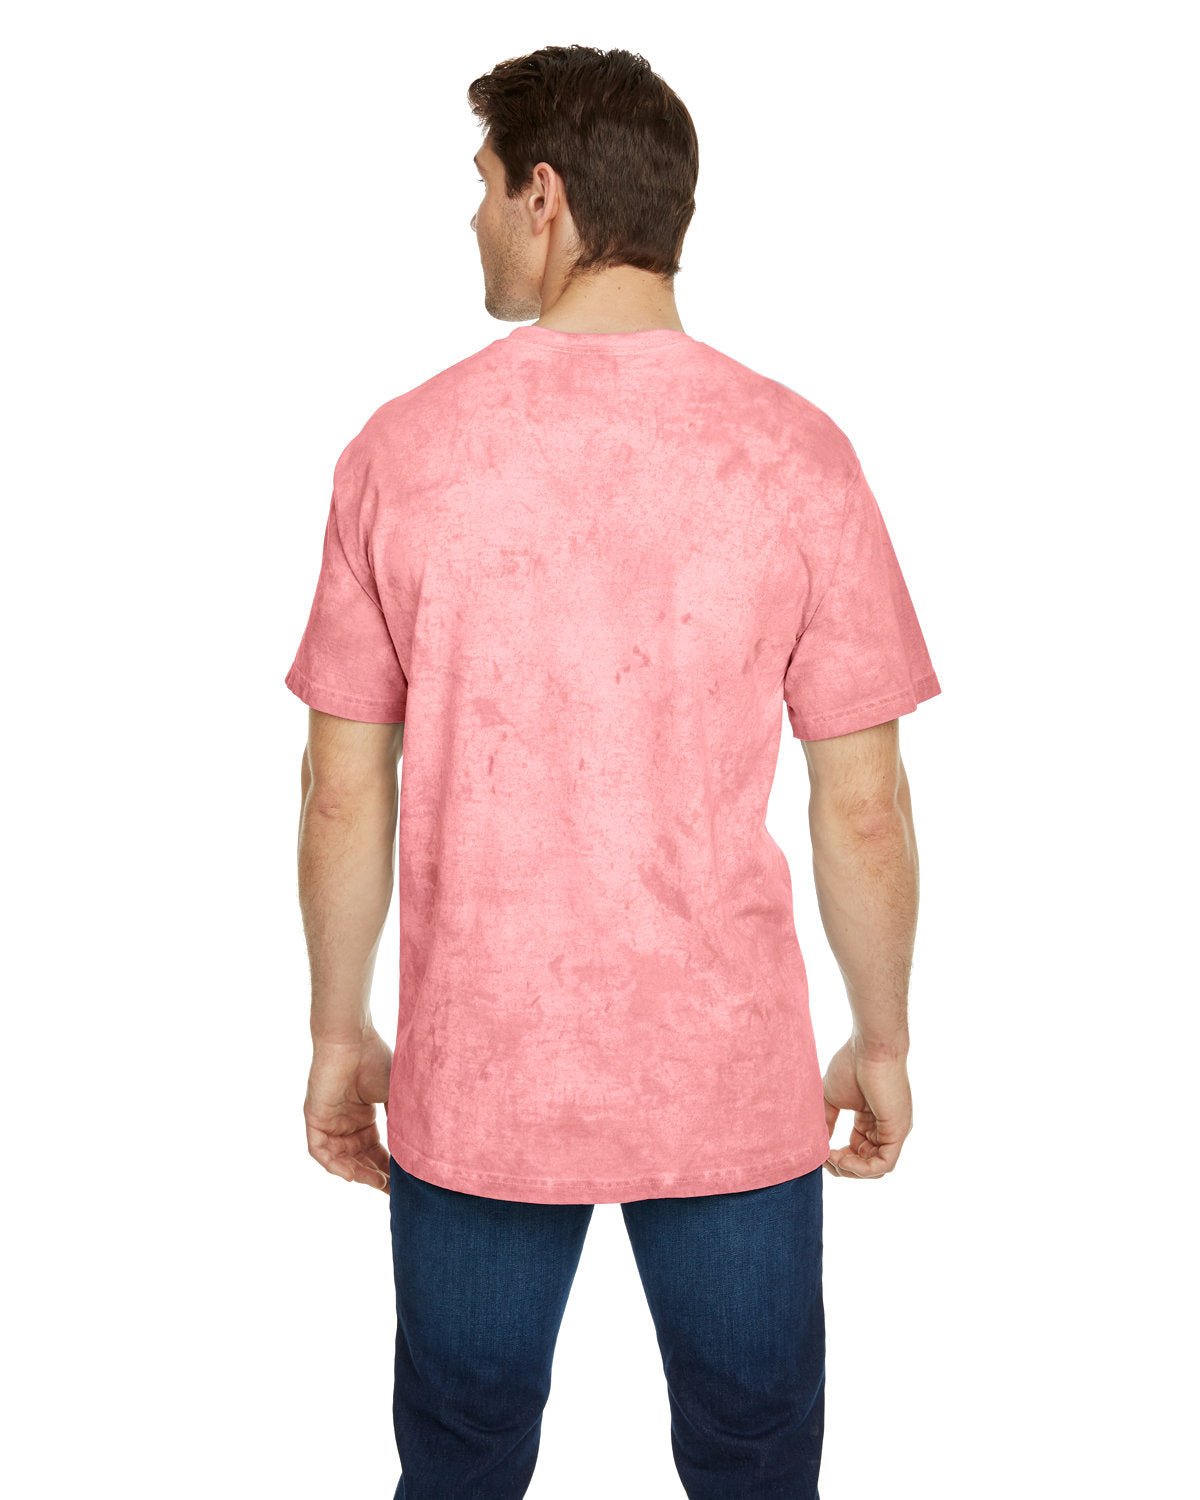 1745-Comfort Colors-CLAY-Comfort Colors-T-Shirts-2